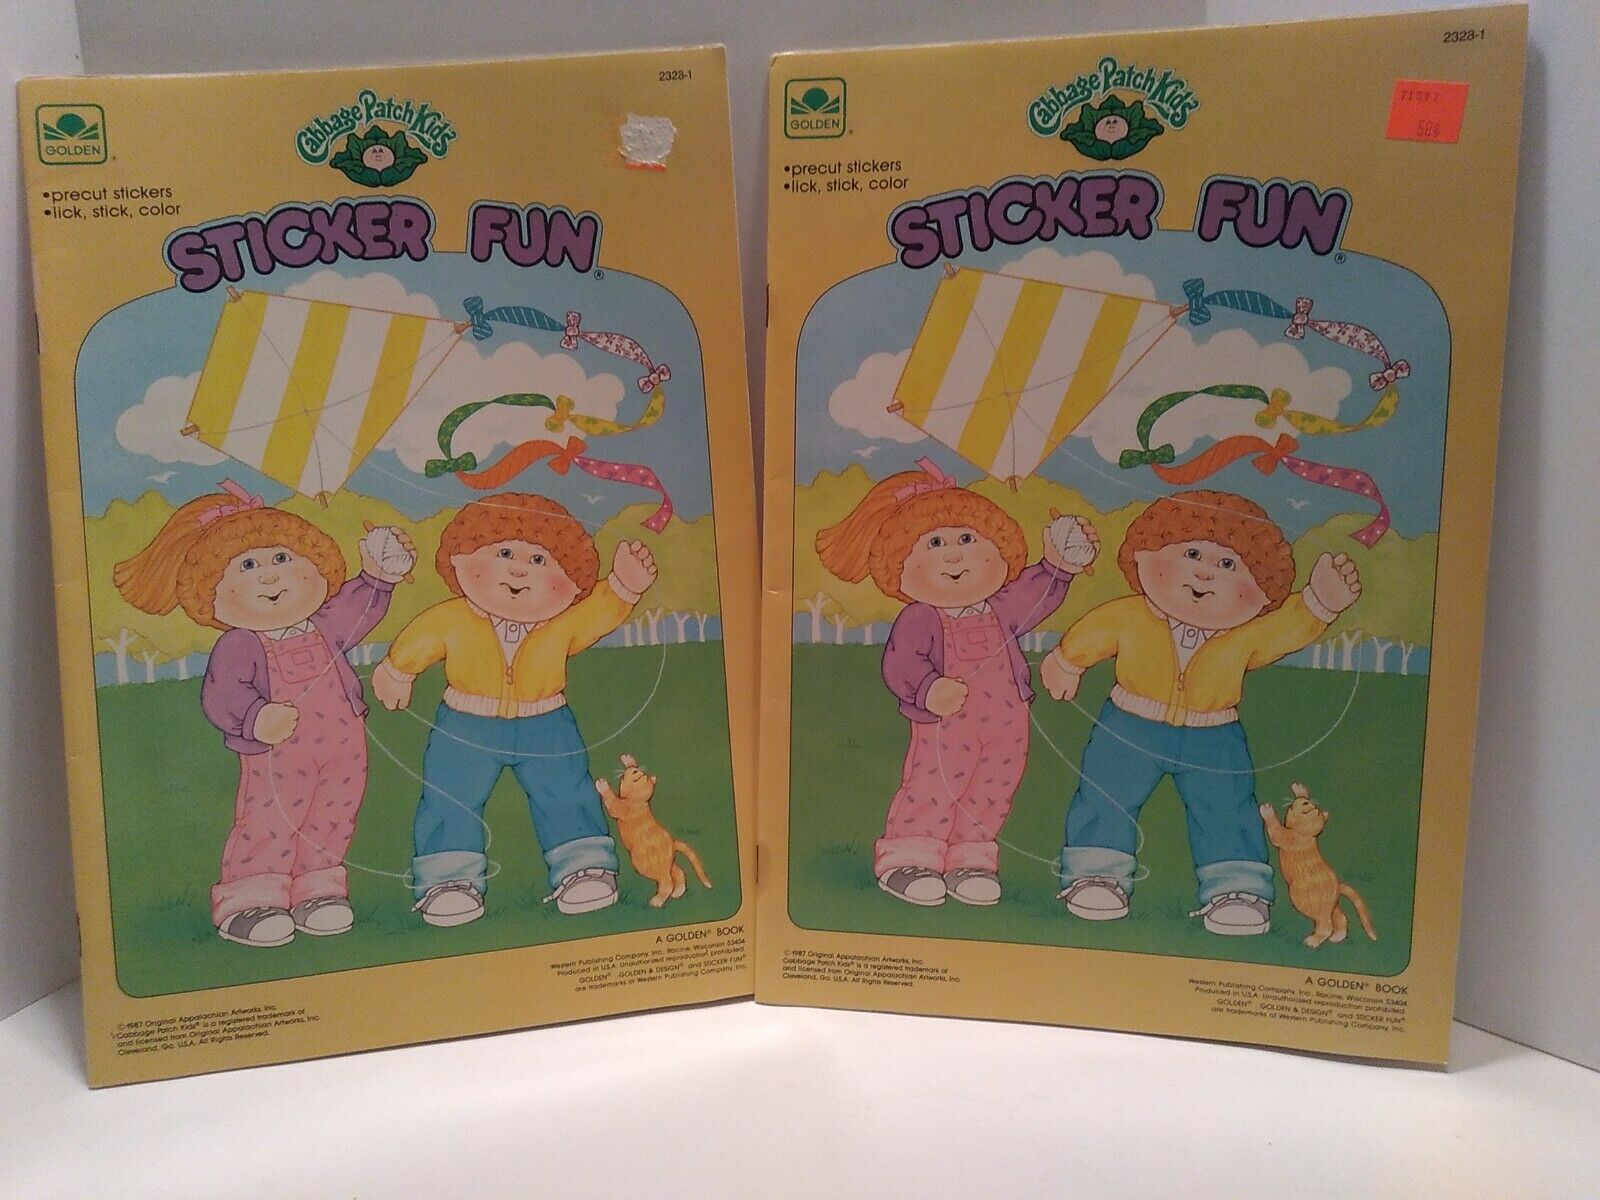 CABBAGE PATCH KIDS sticker fun softcover book (1987) Golden Press